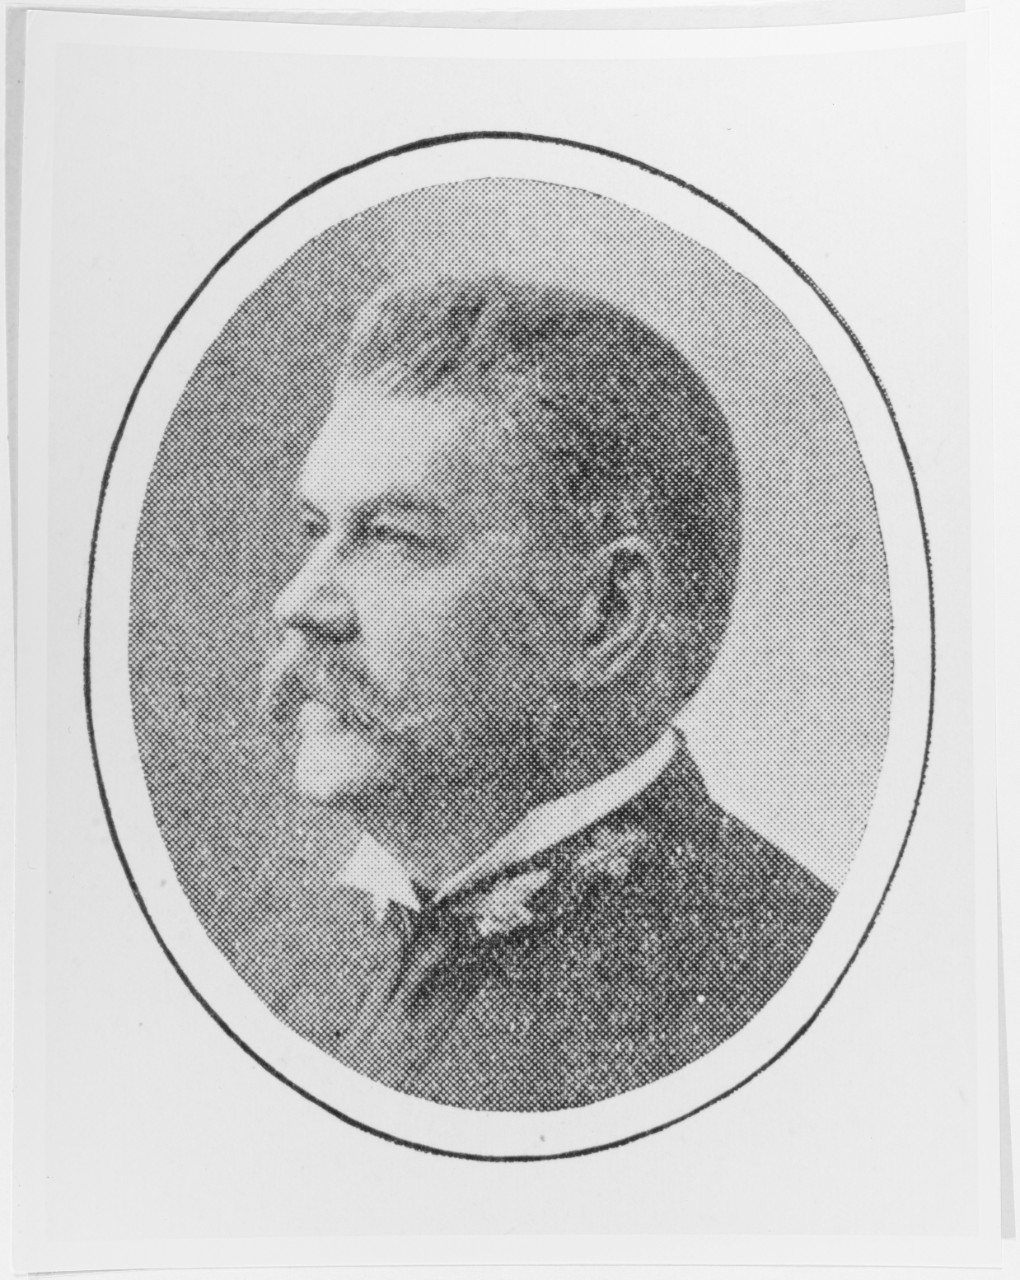 Charles J. Macconnell